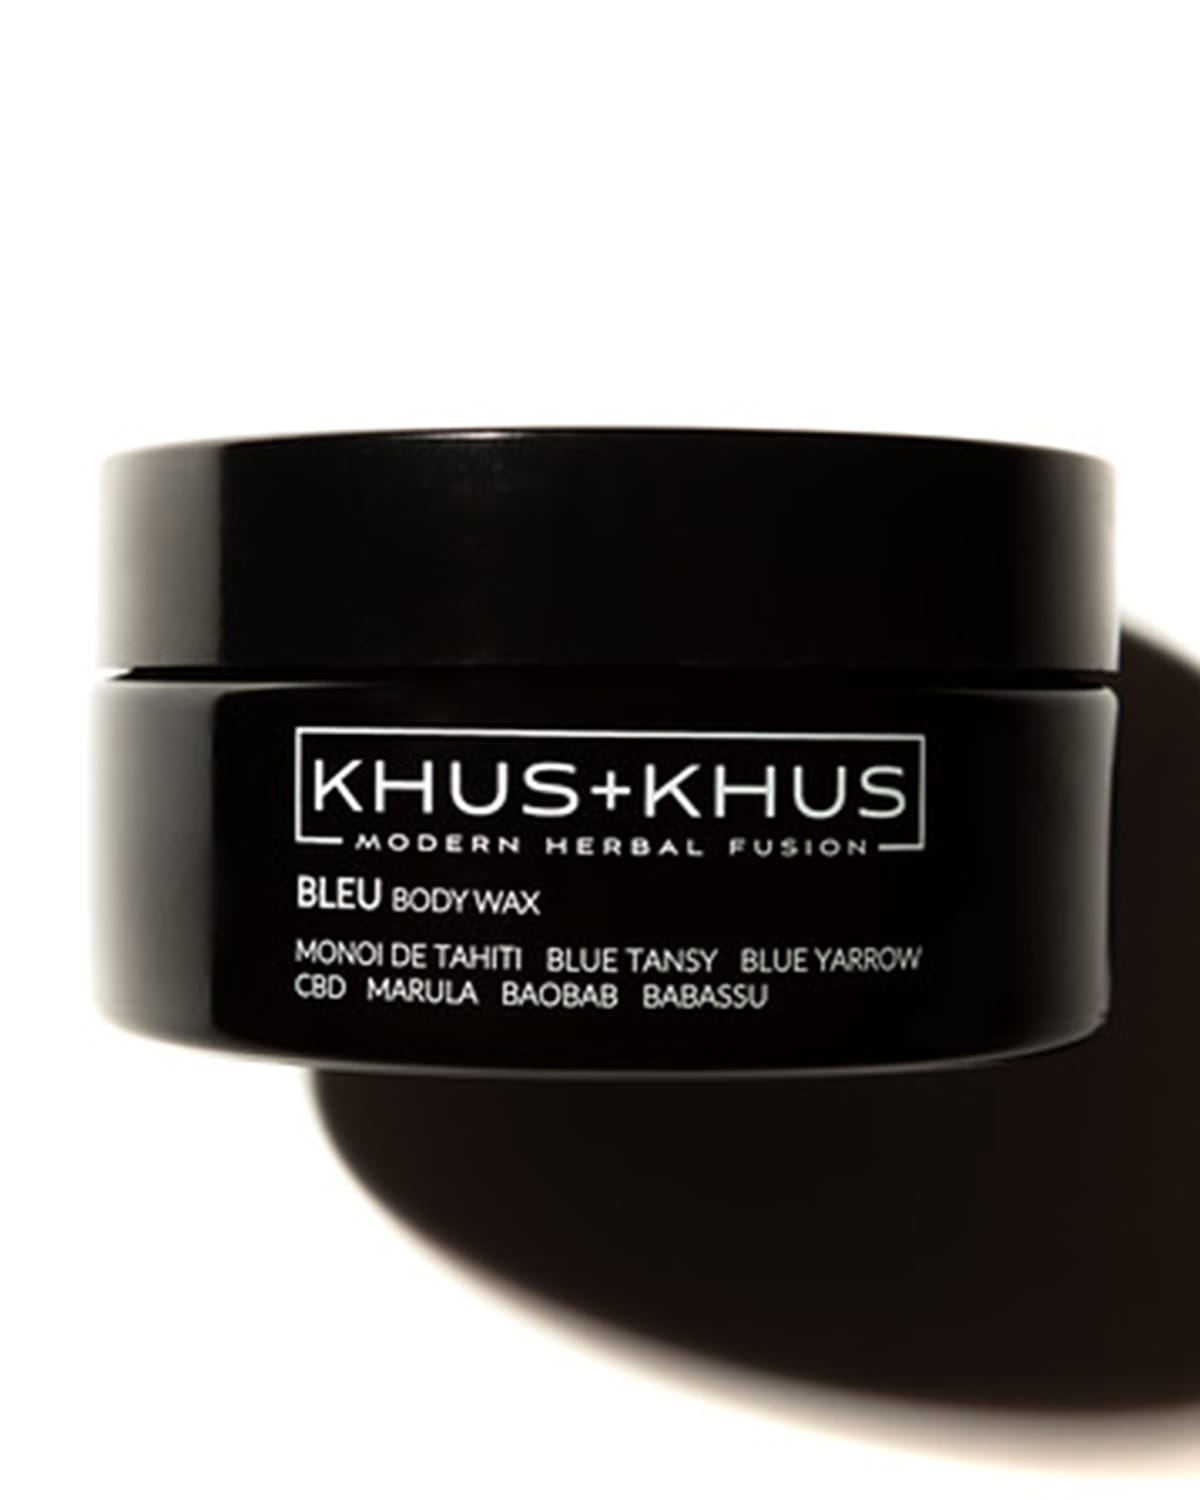 KHUS + KHUS 6.8 oz. Bleu Body Wax with CBD